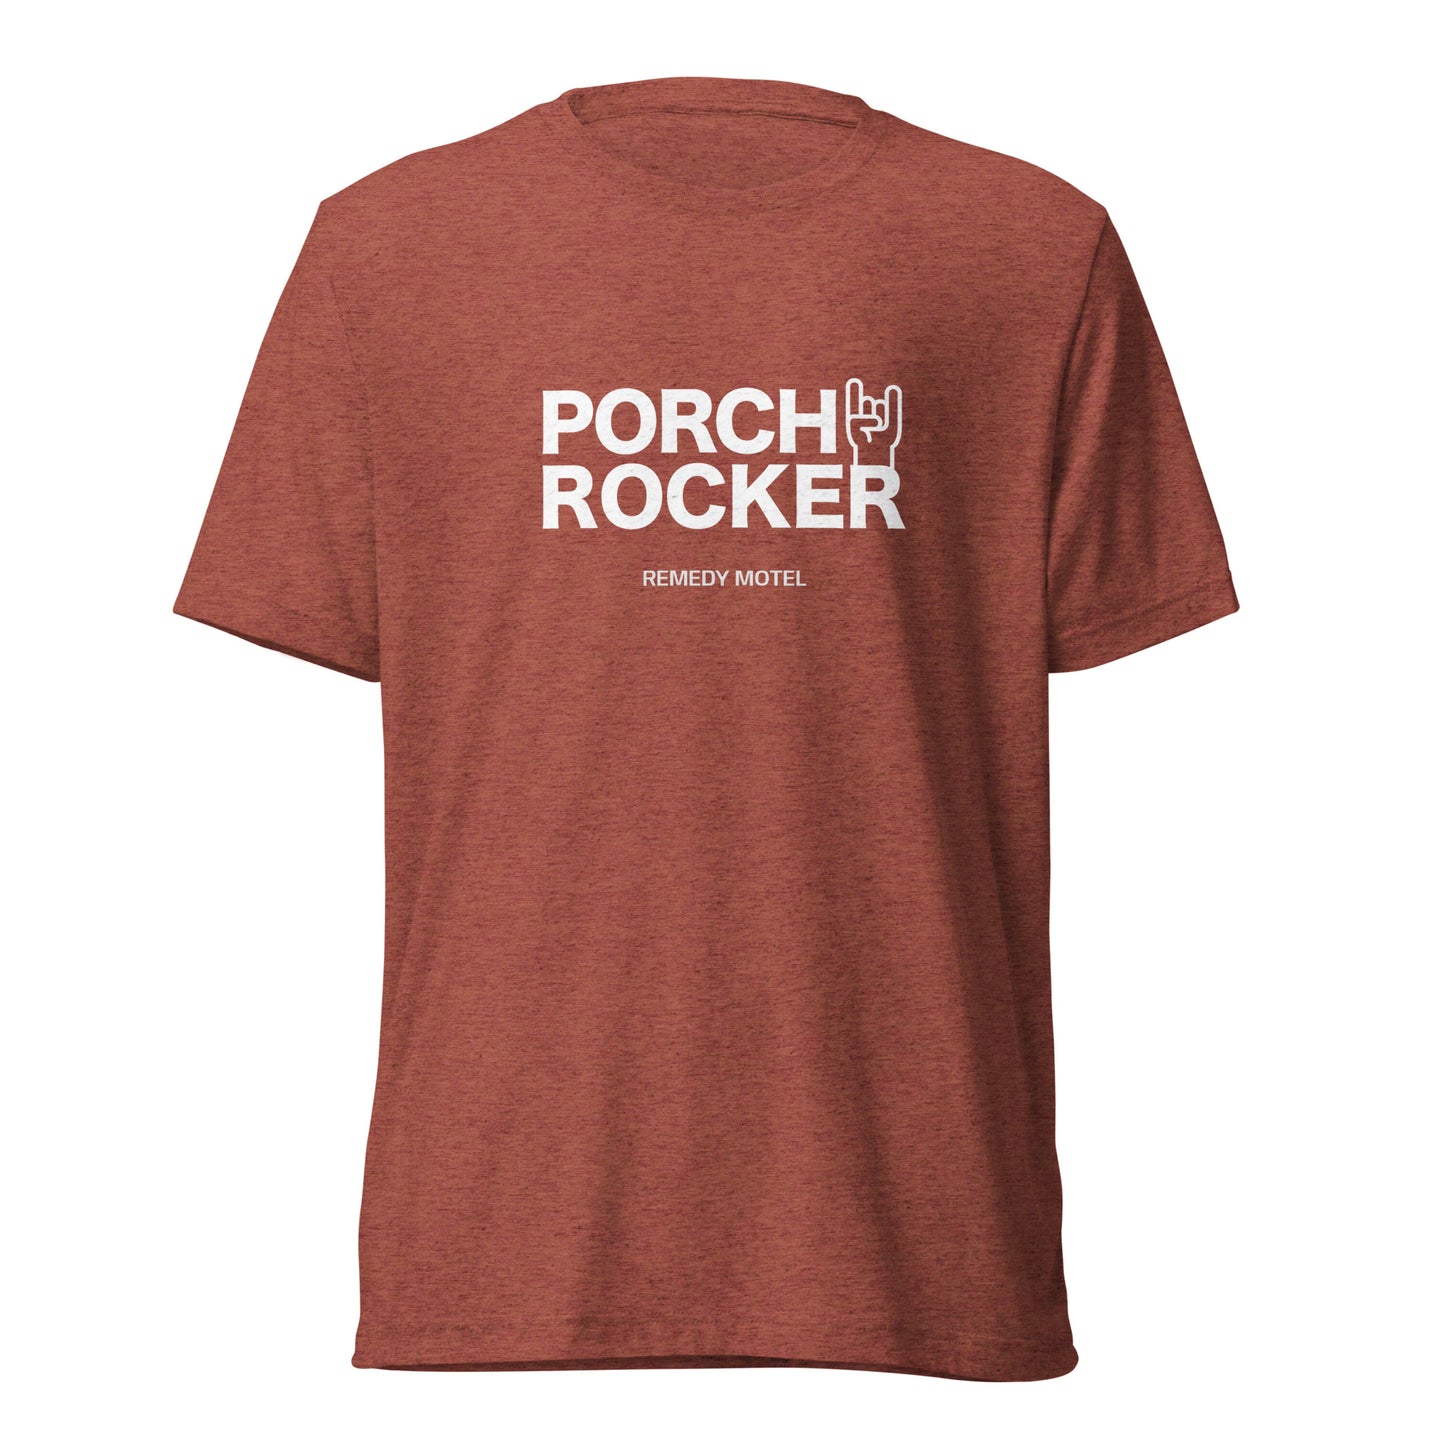 Porch Rocker by Remedy Motel Short sleeve unisex t-shirt